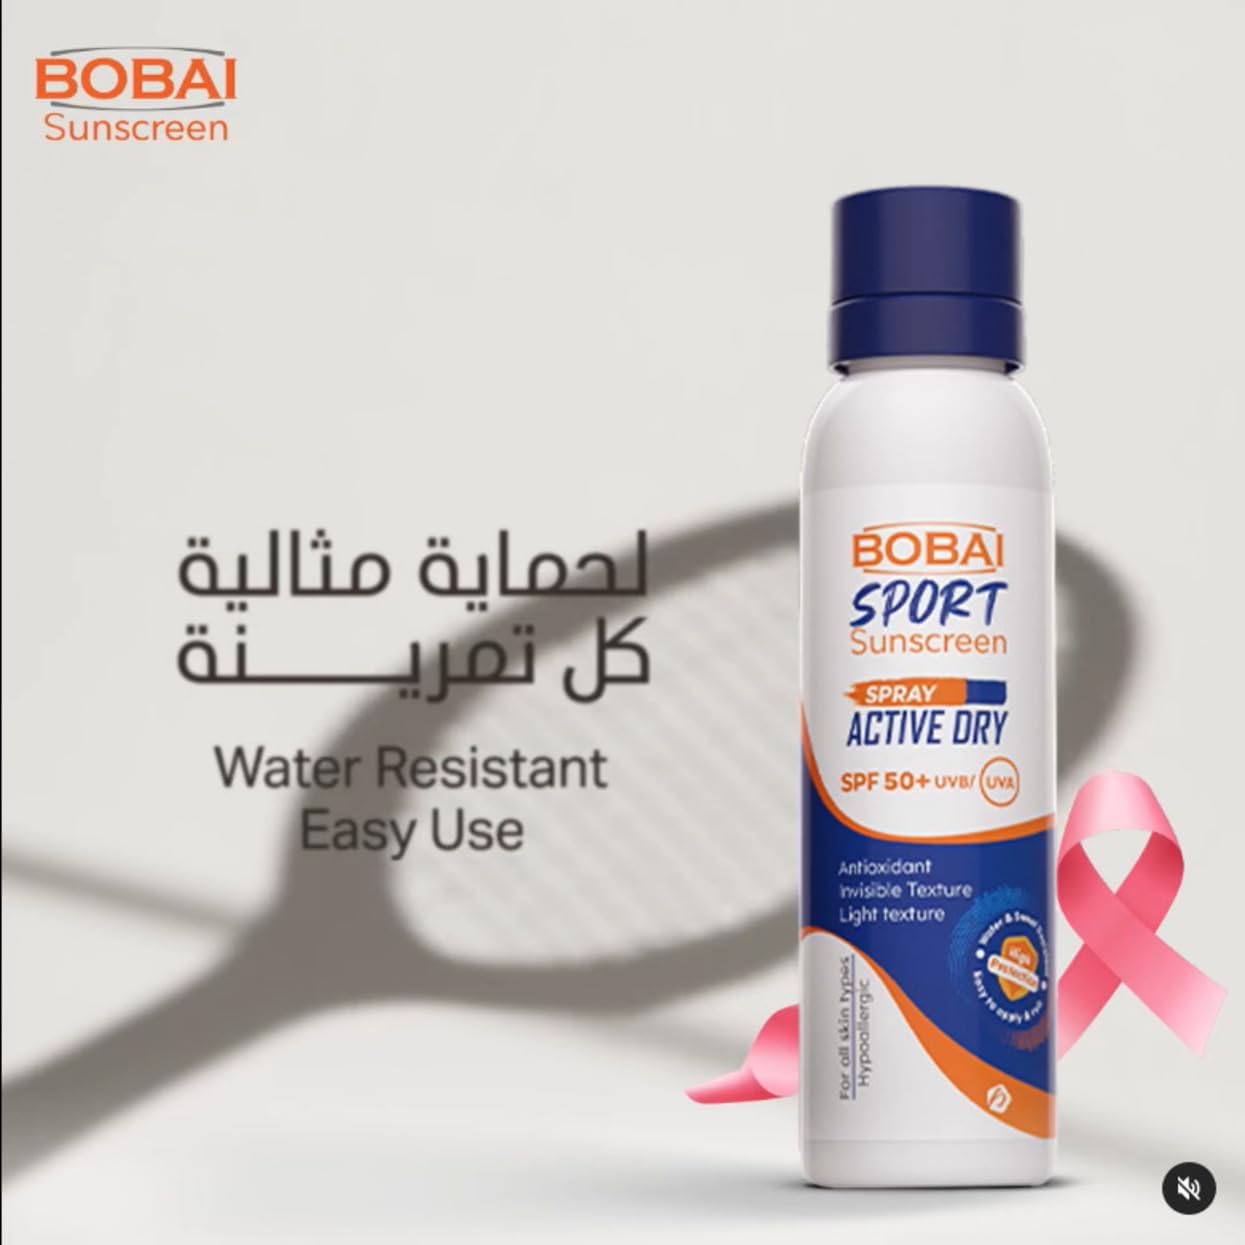 BOBAI sunscreen sport spray 200ML